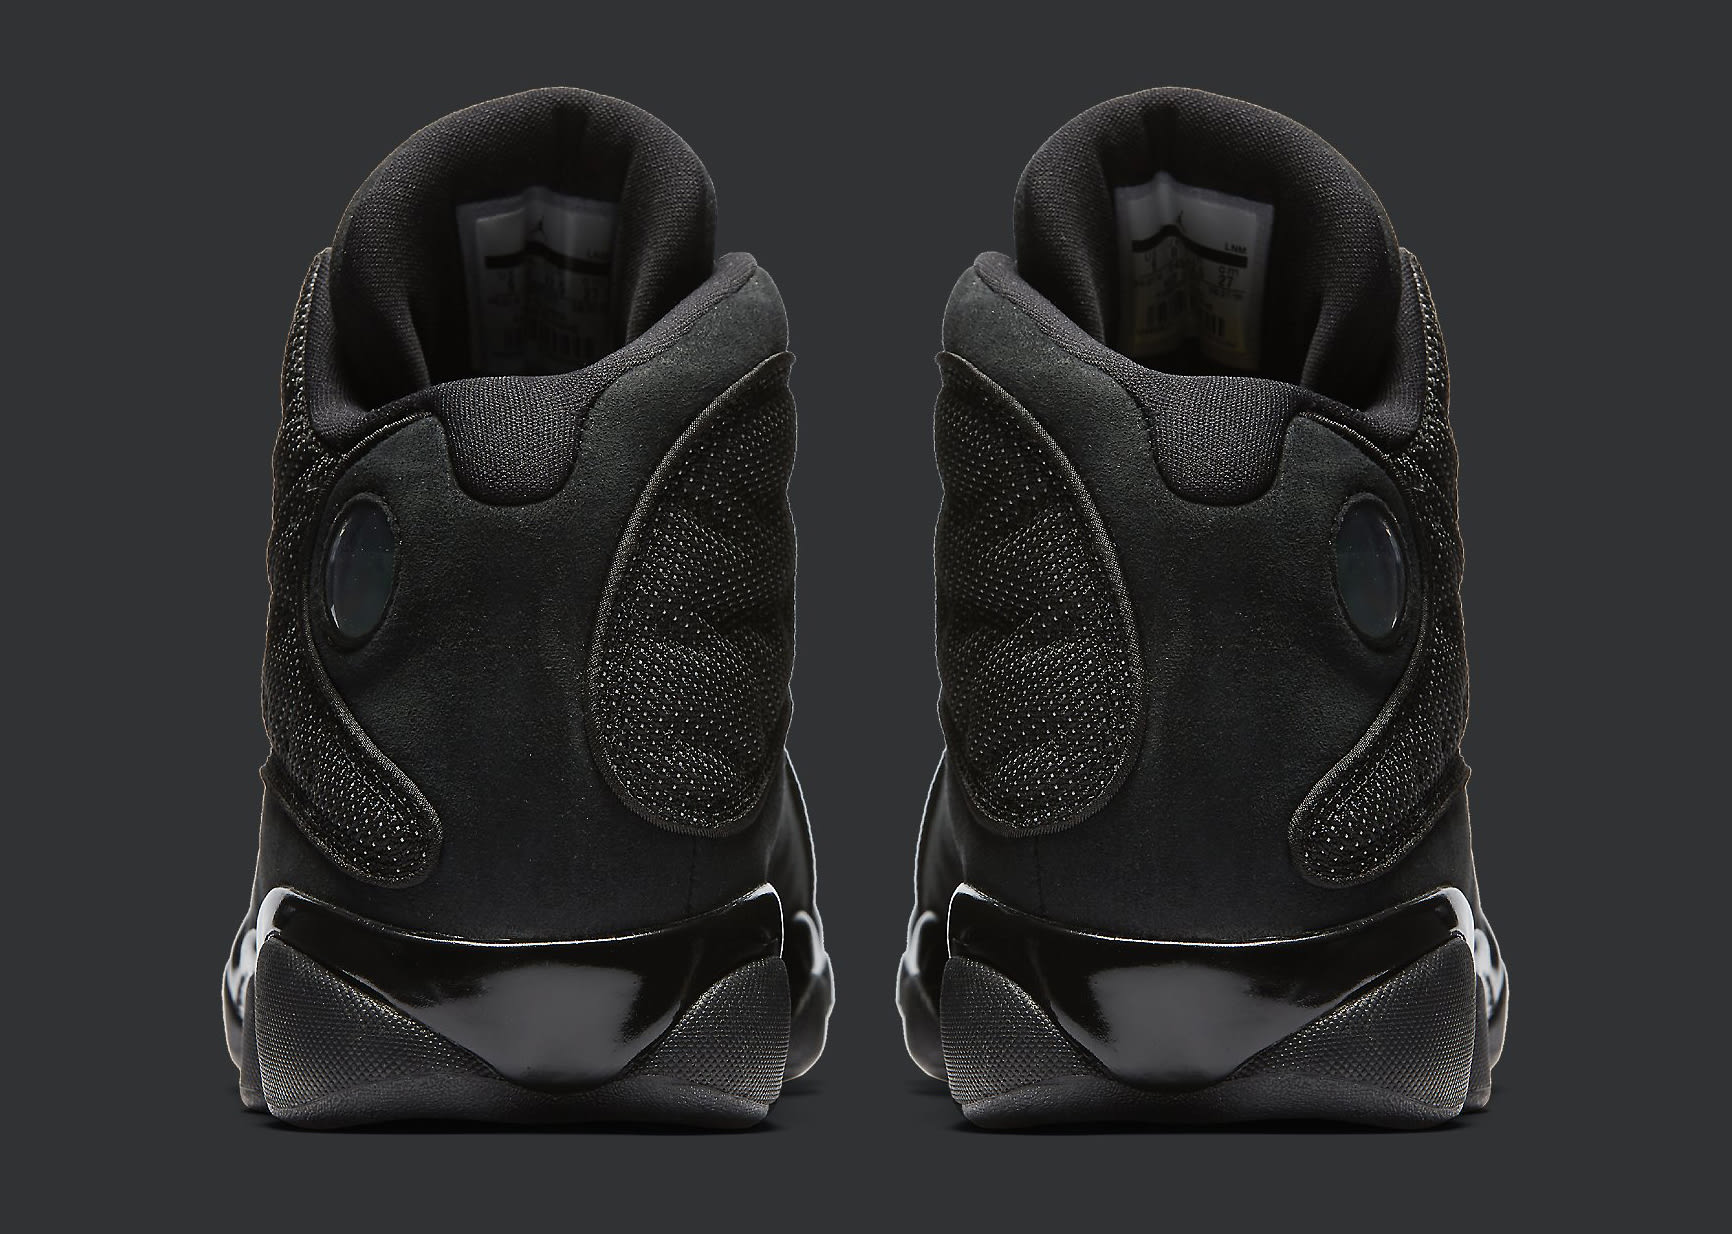 Black Cat Air Jordan 13 Release Date | Sole Collector